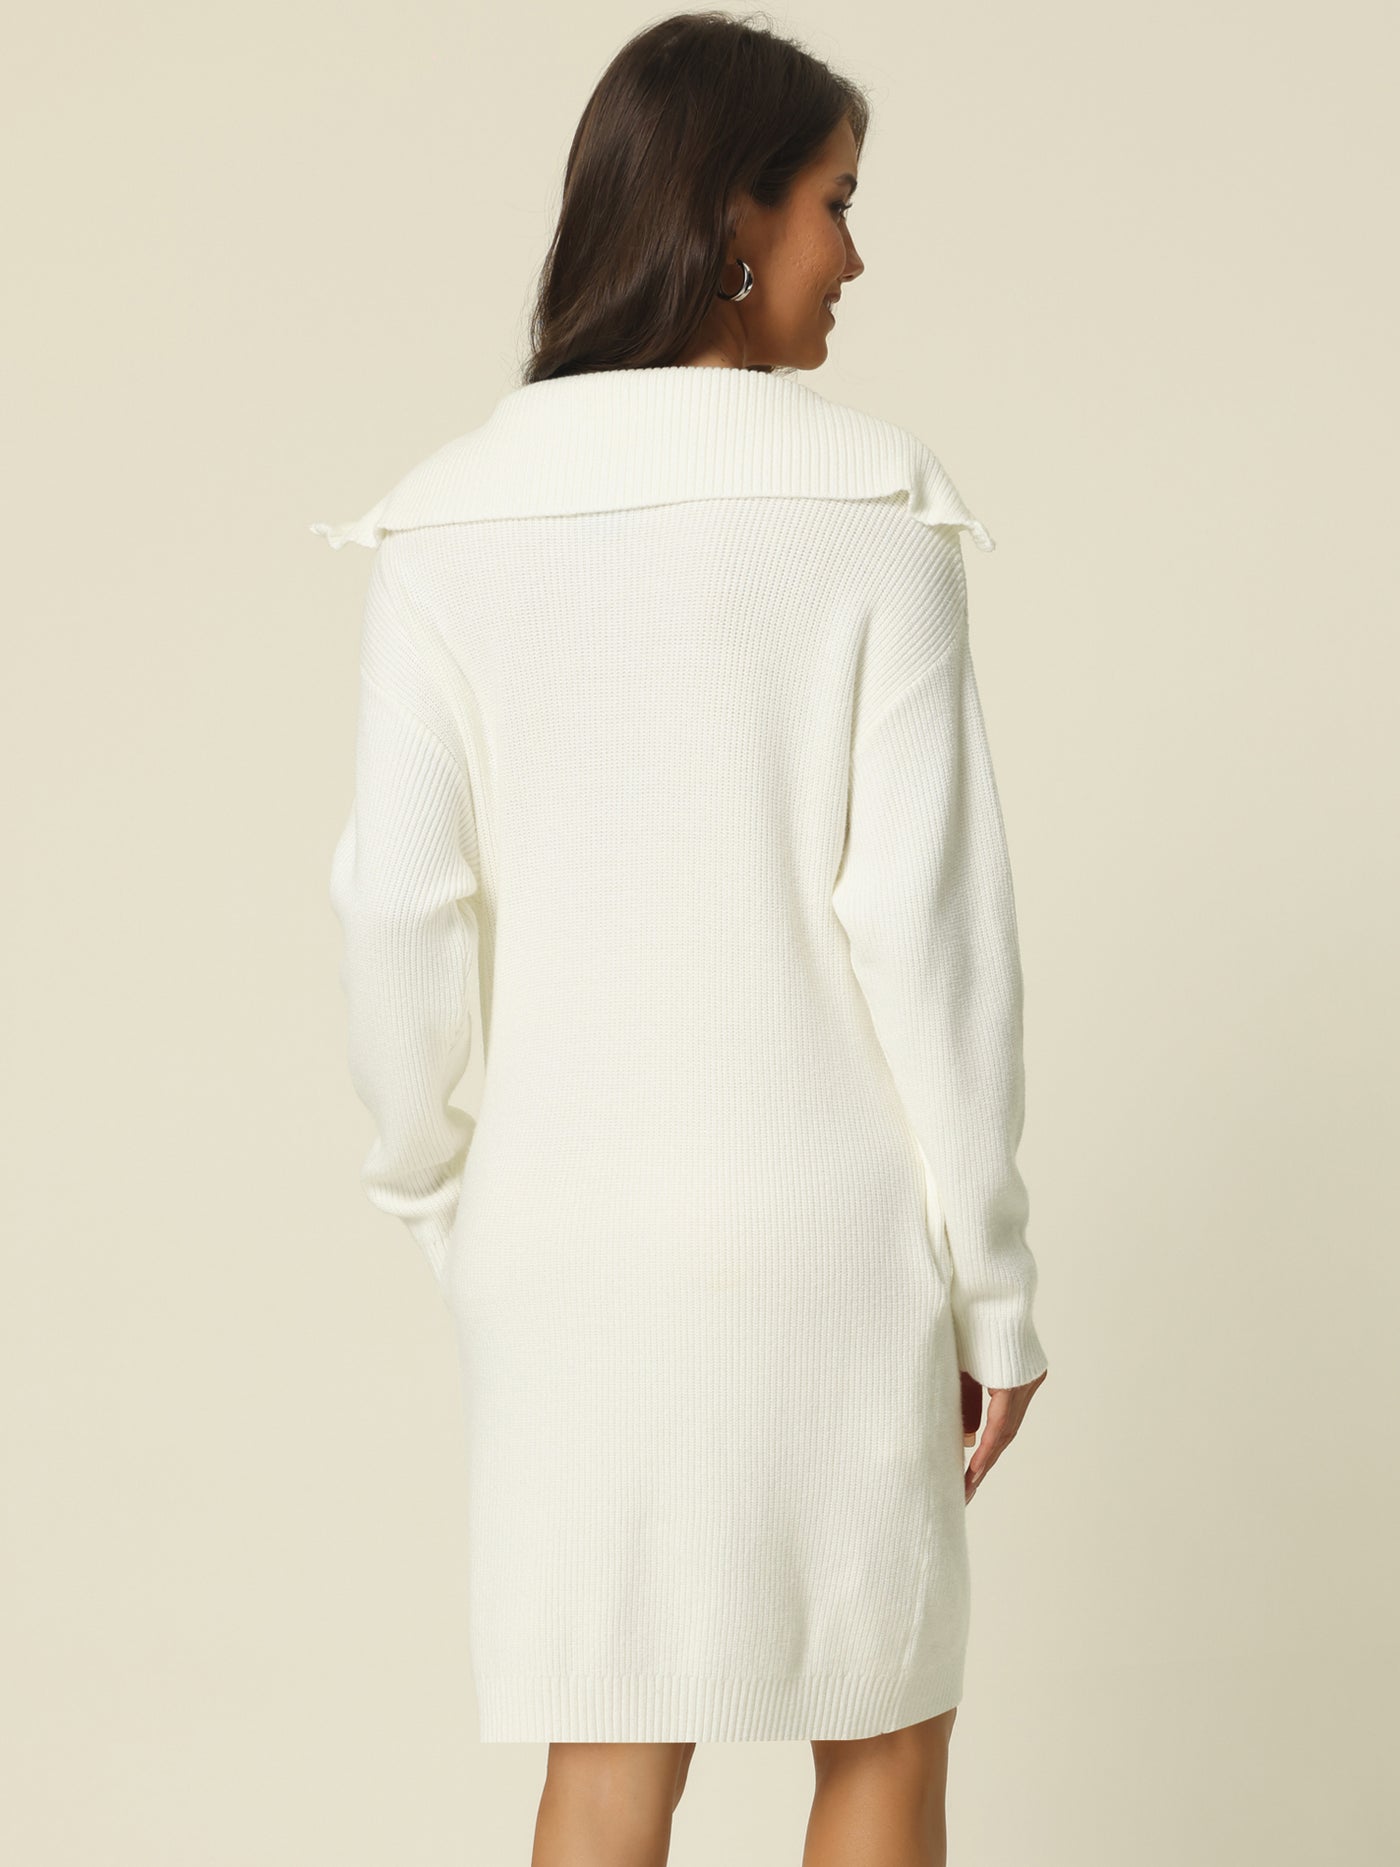 Bublédon Women's Zipper V Neck Long Sleeve Slim Fit Casual Fall Winter Above Knee Sweater Dress